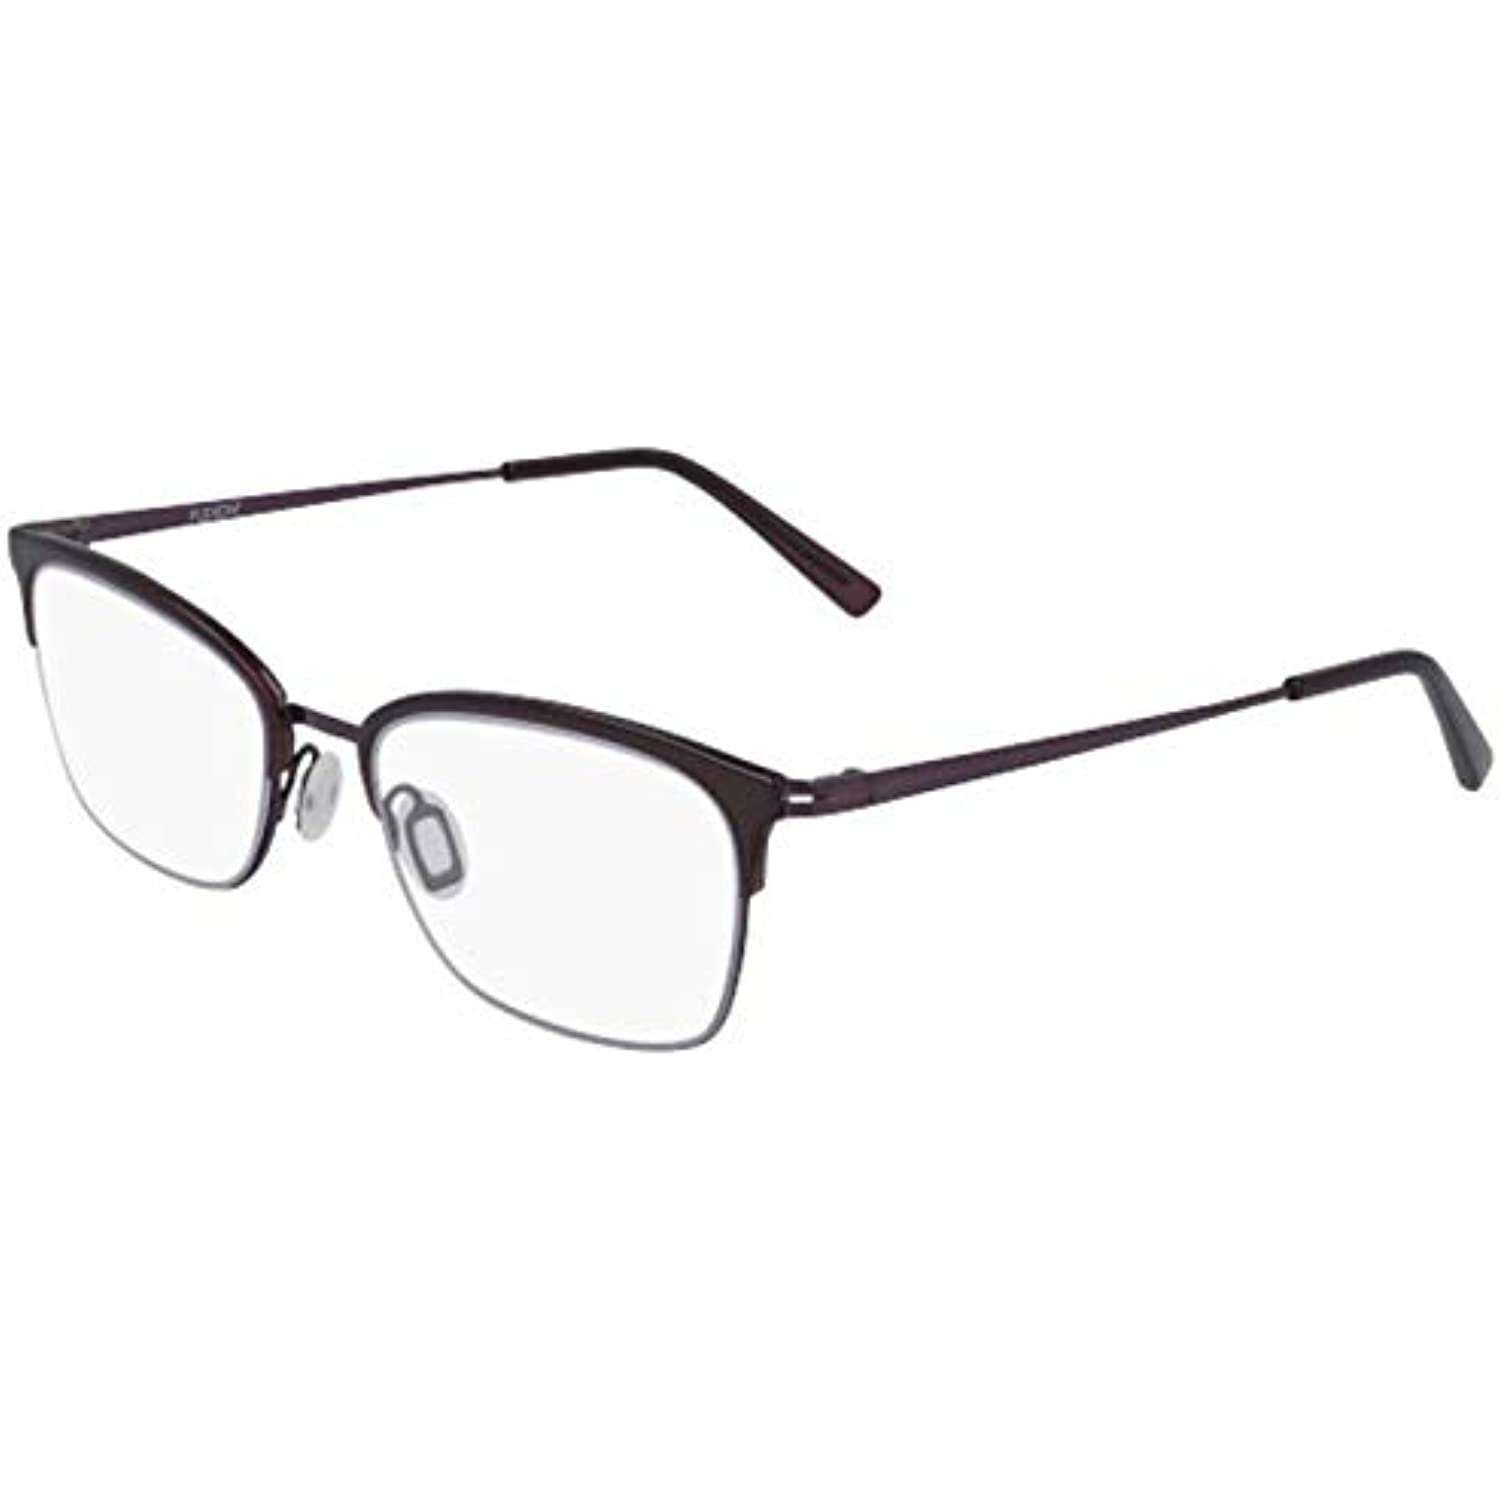 NEW FLEXON W 3024 505 Plum Flexible Titanium Eyeglasses 53mm with